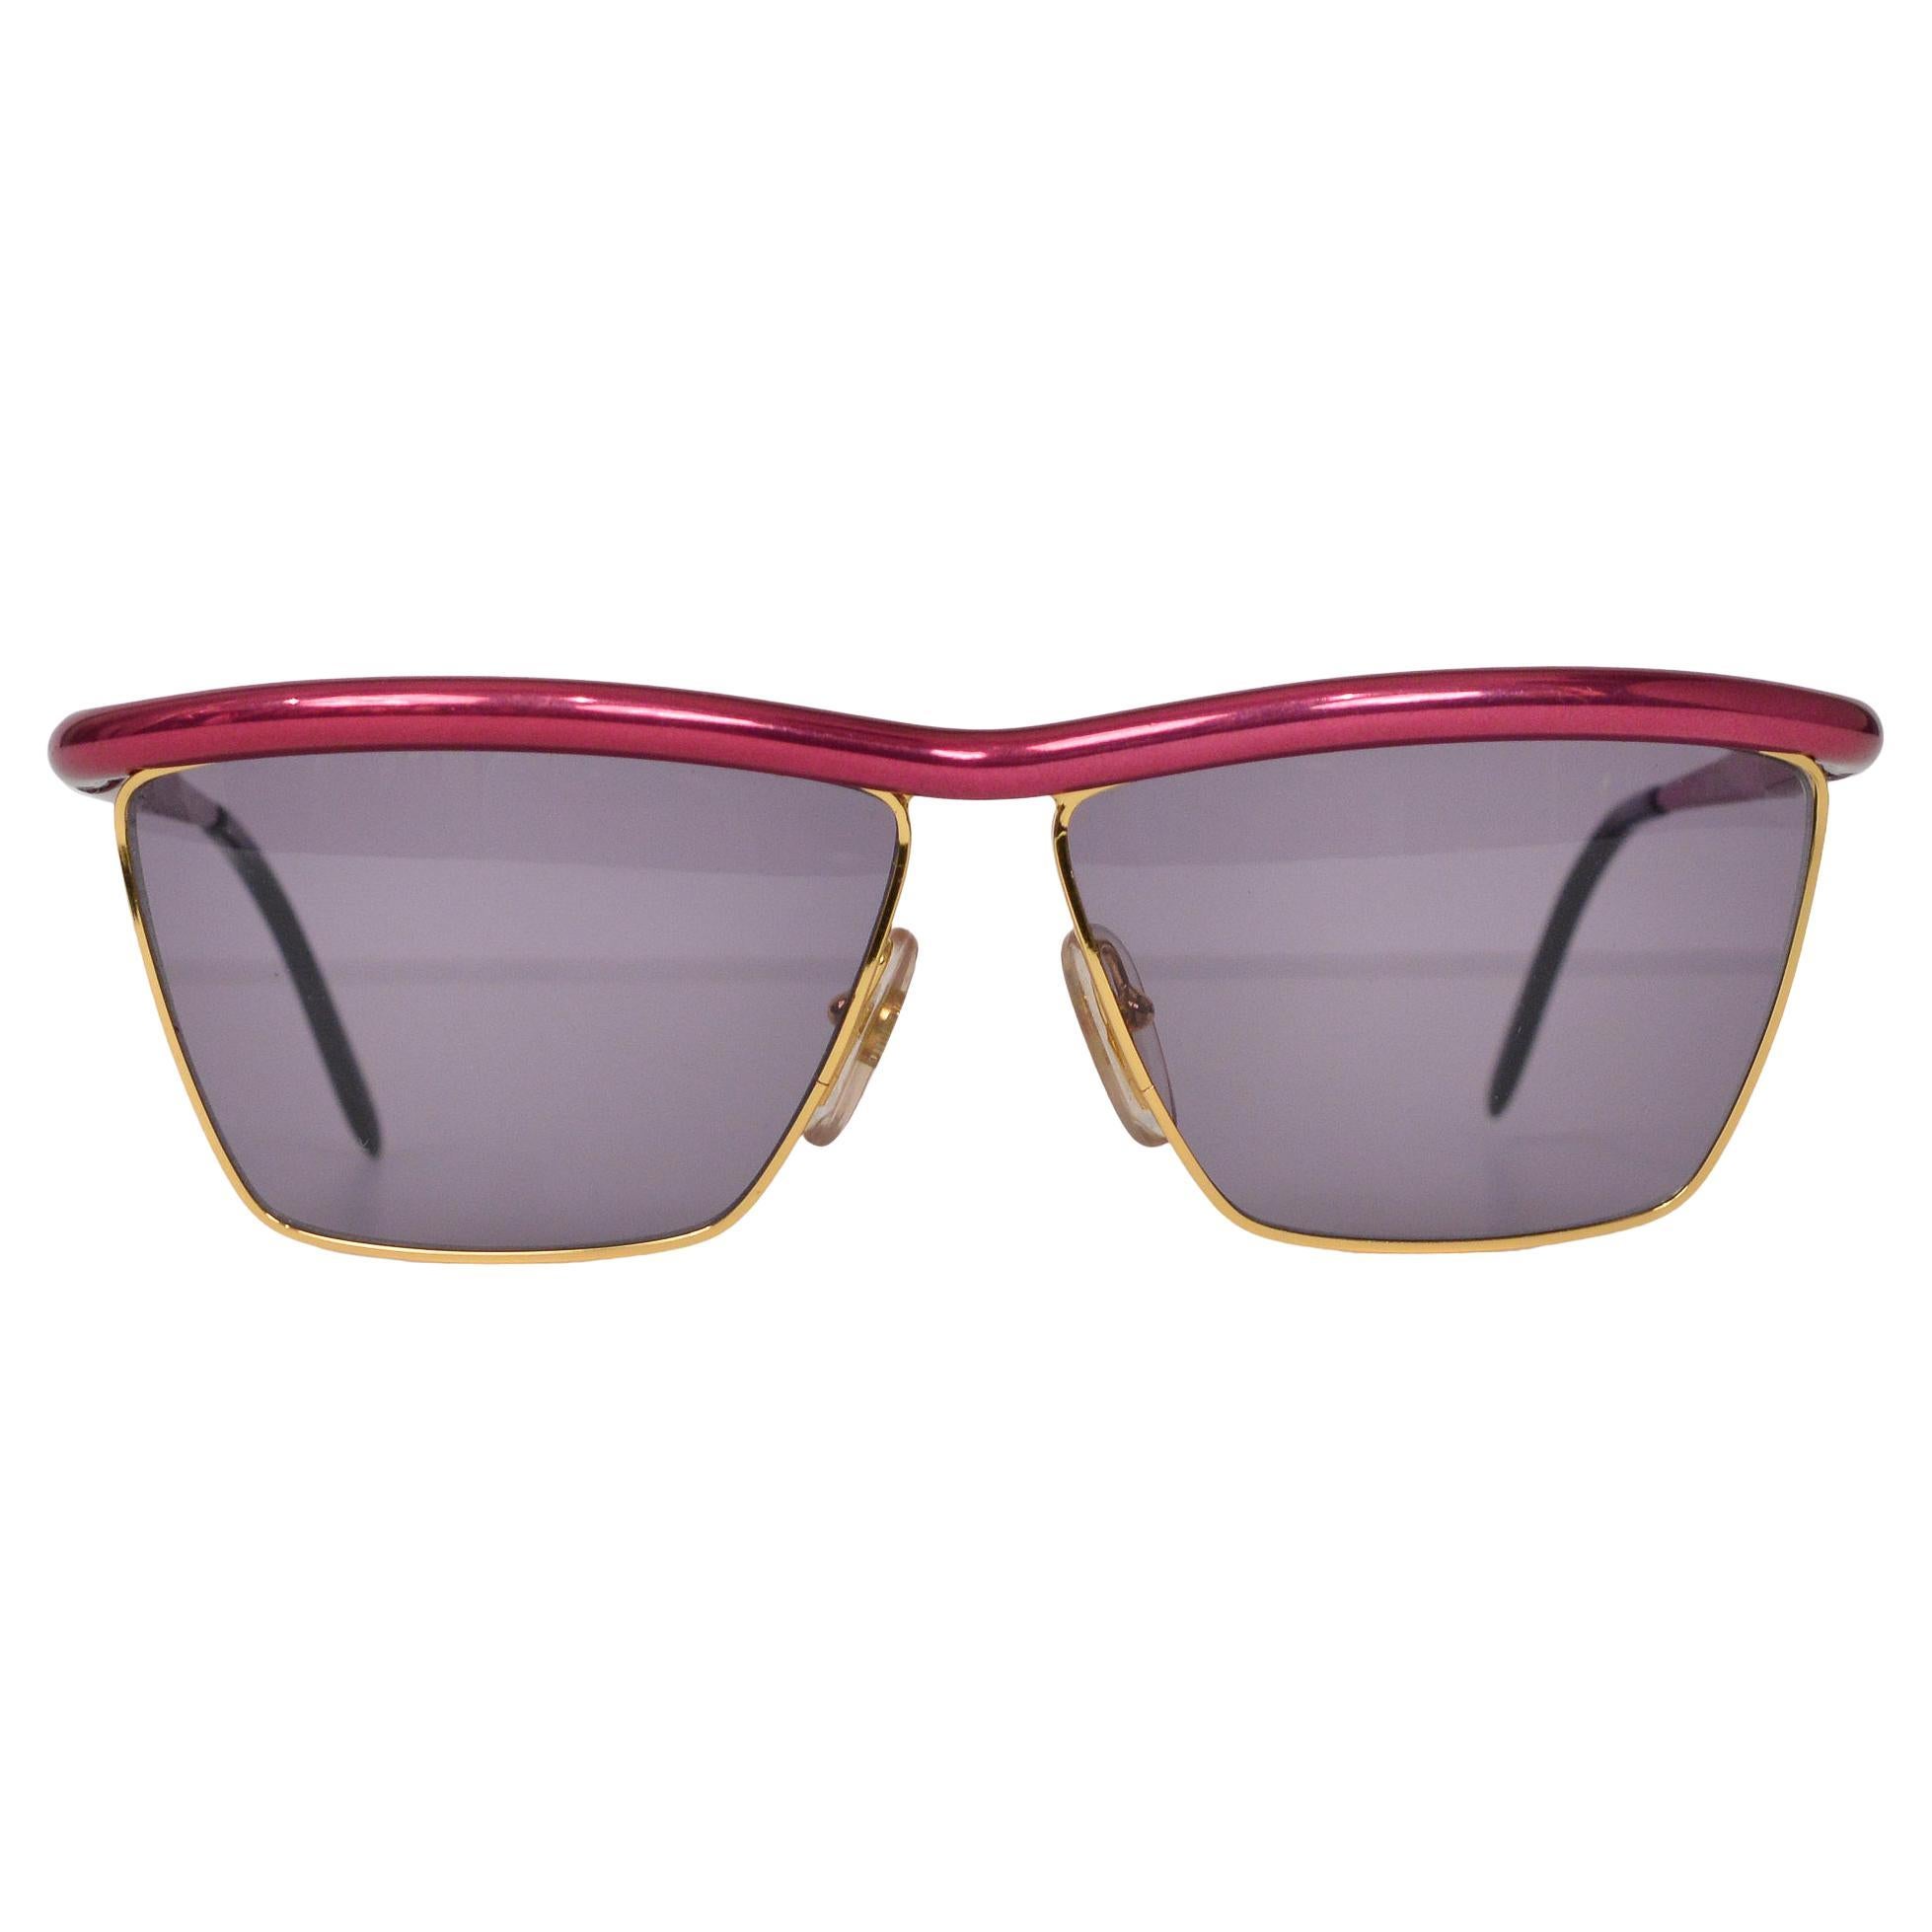 Vintage Gianfranco Ferre Metallic Pink Sunglasses with Smokey Lenses 